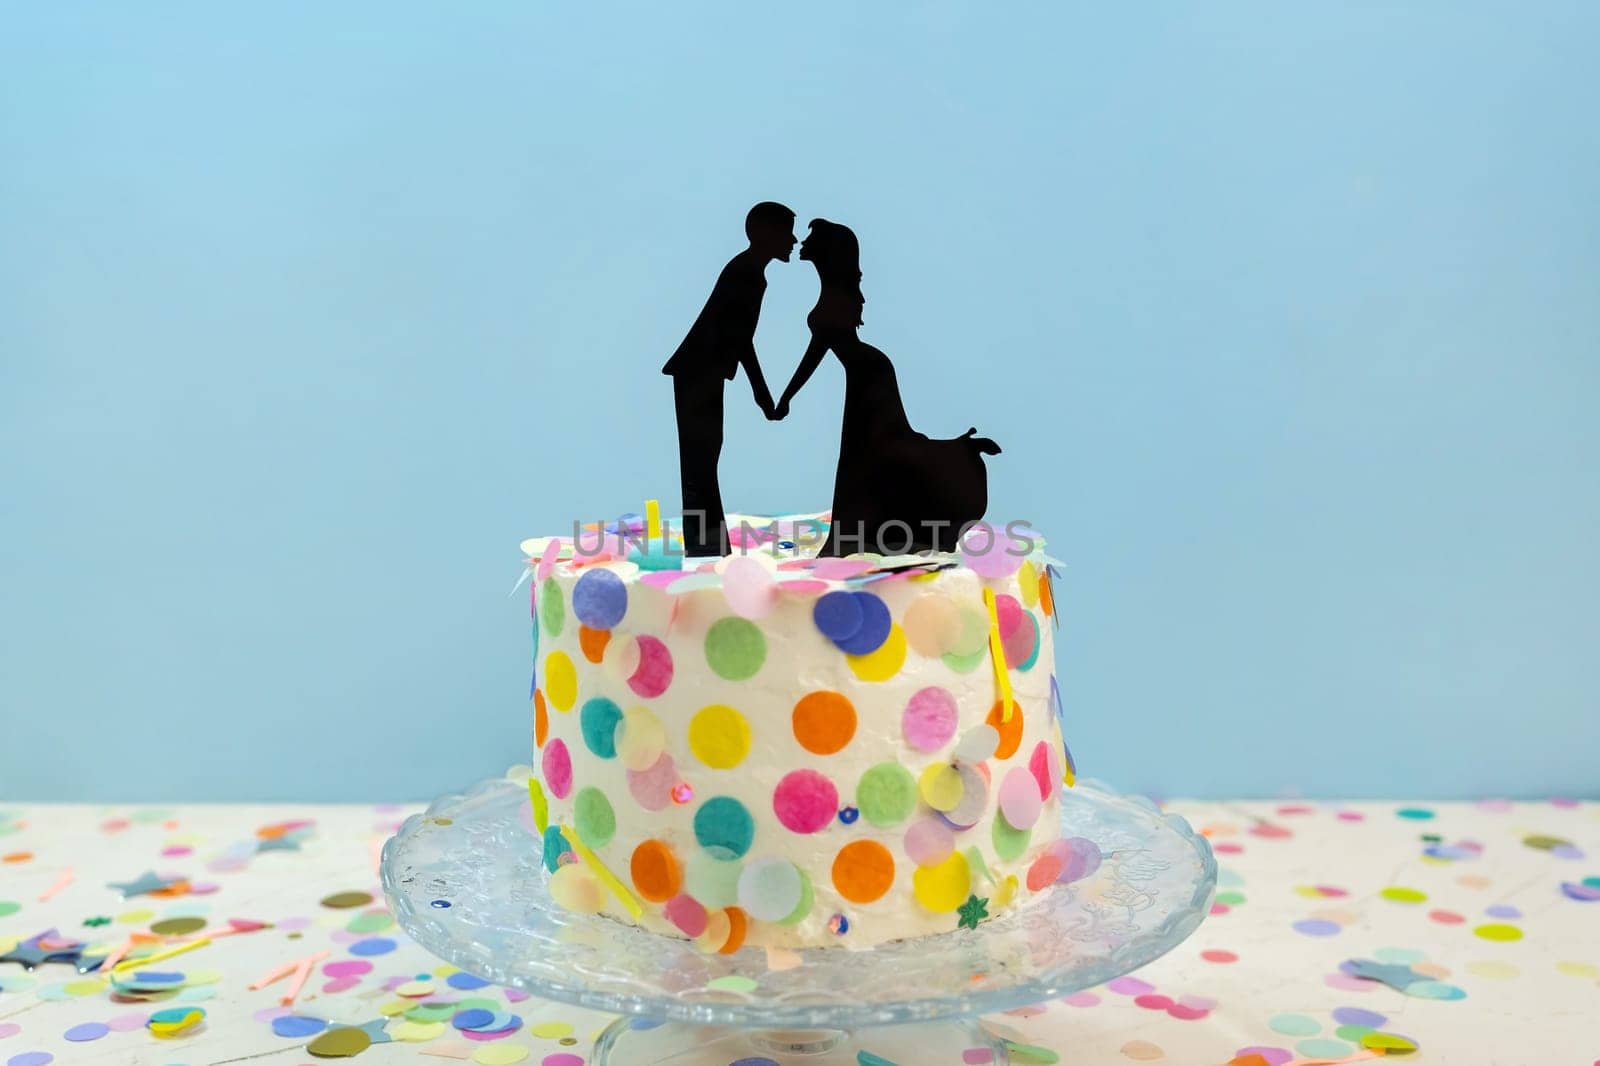 Bride and groom kissing wedding cake toppers on wedding cake by dmitryz